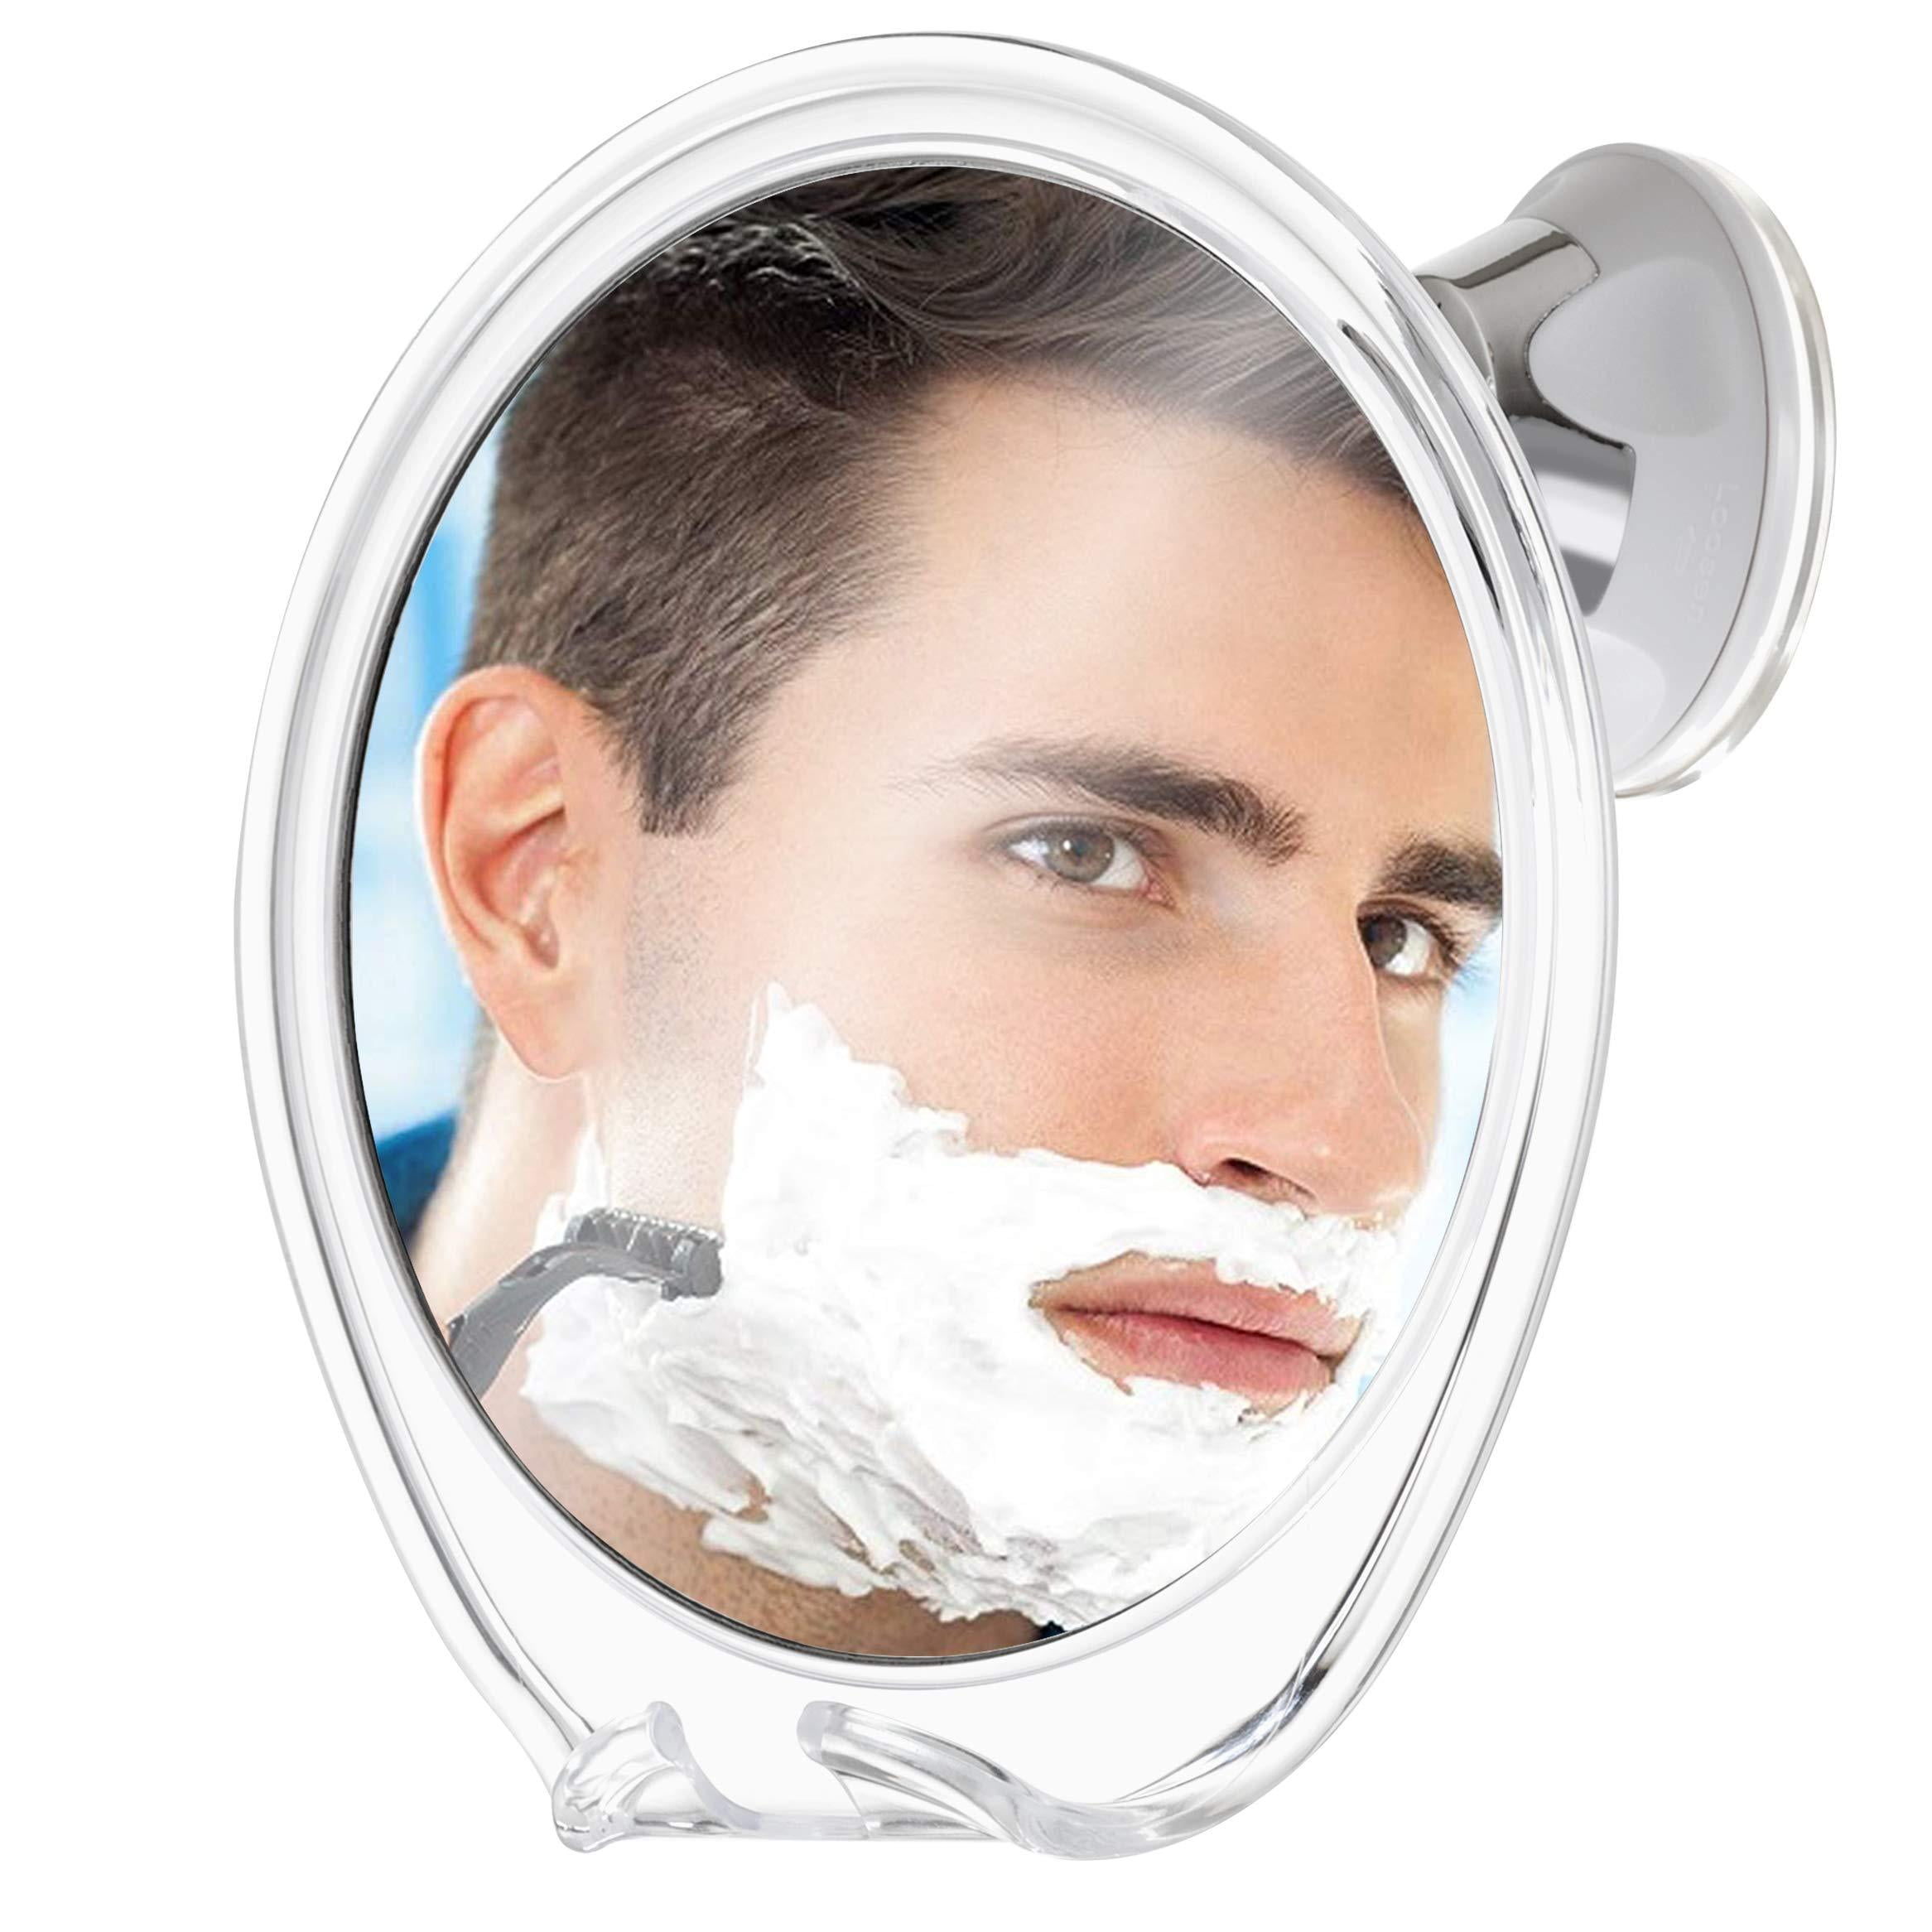 Sticky Details about   Mirrorvana Fogless Shower Mirror for Fog Free Shaving with Razor Holder 